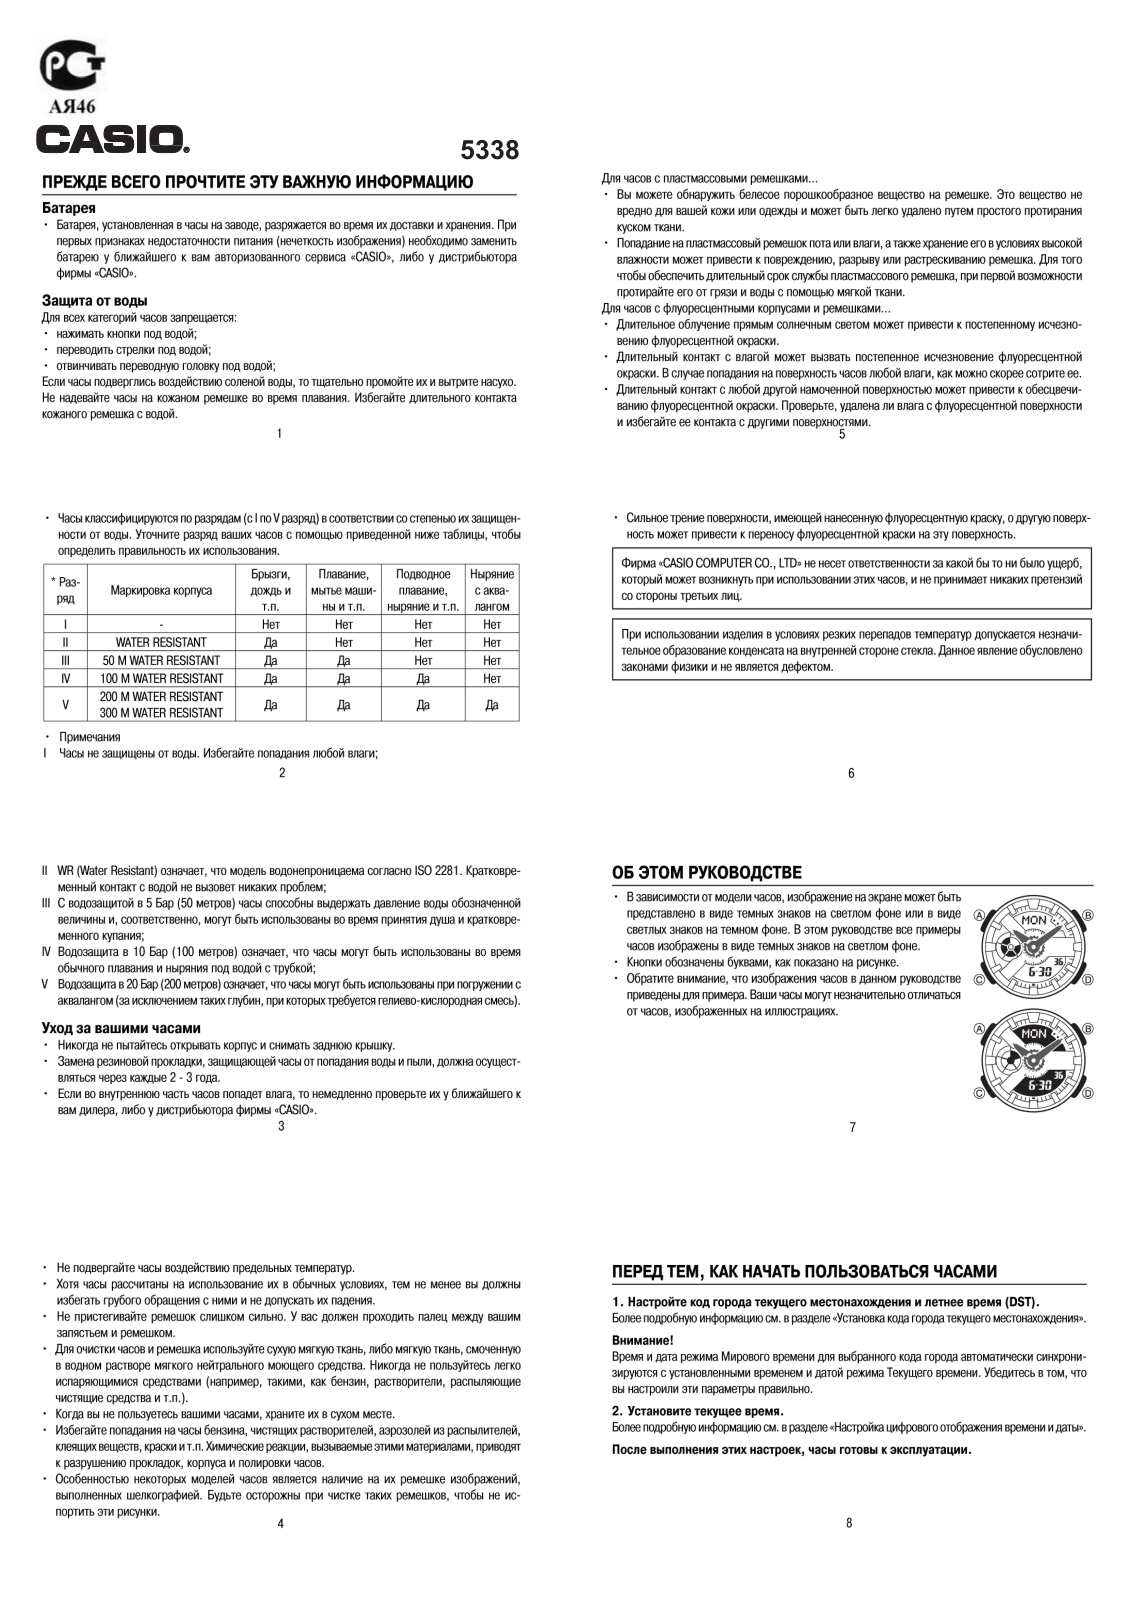 Casio BA-110TX-4A User Manual